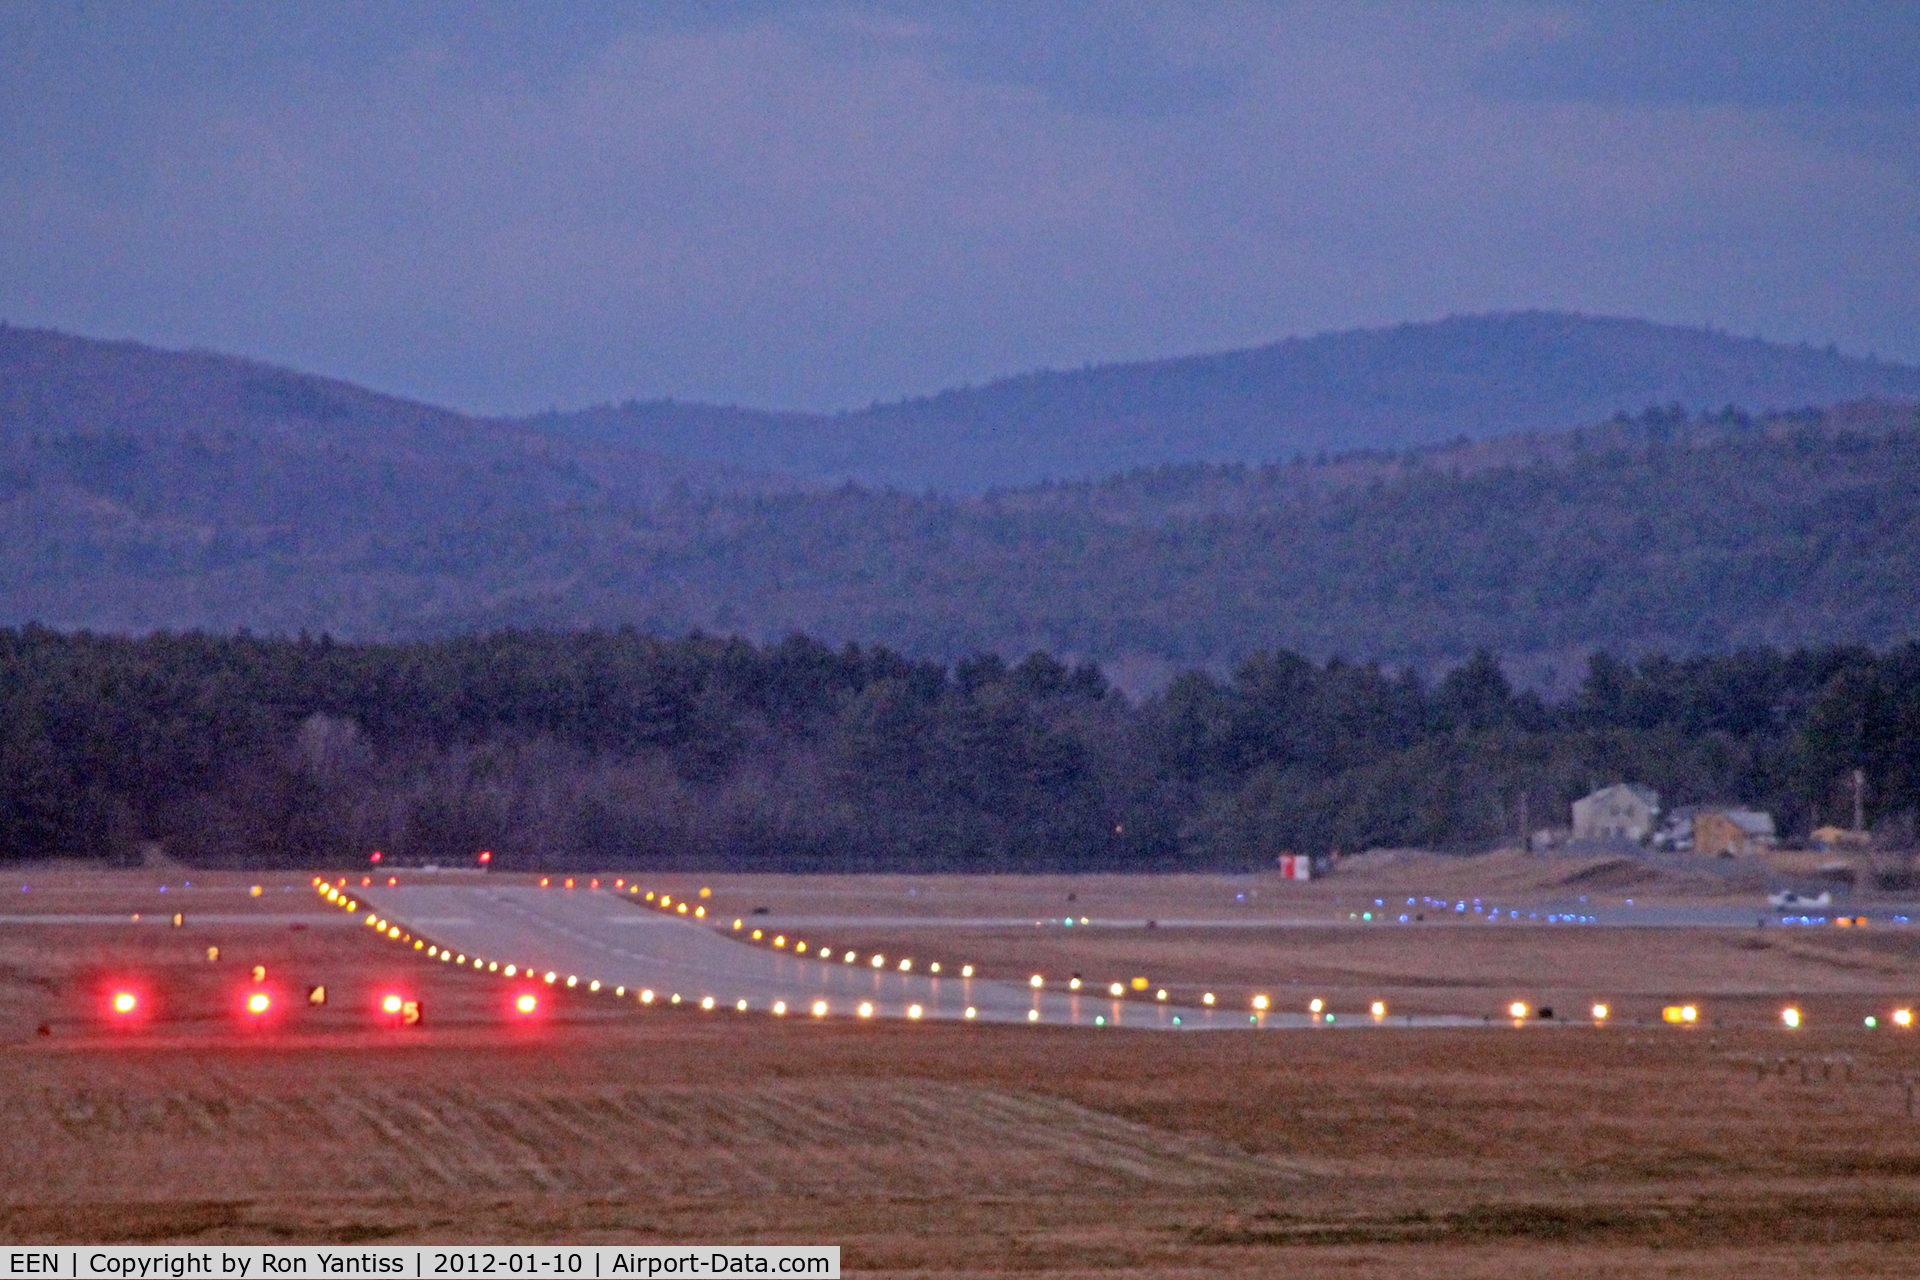 Dillant-hopkins Airport (EEN) - Evening lights on runway 02, Dillant-Hopkins Airport, Keene, NH